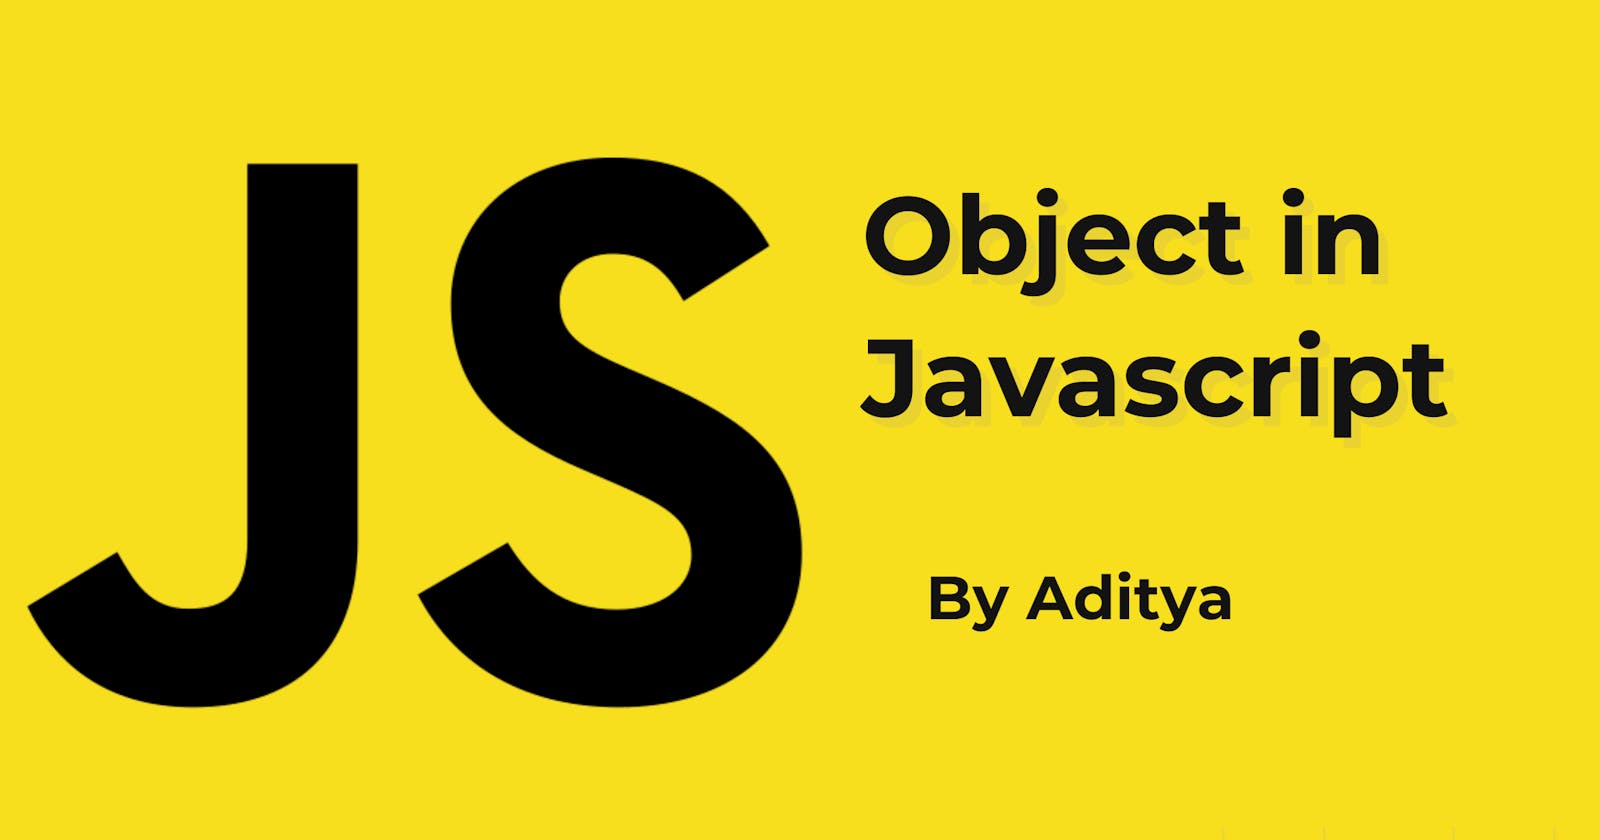 Object in JavaScript.